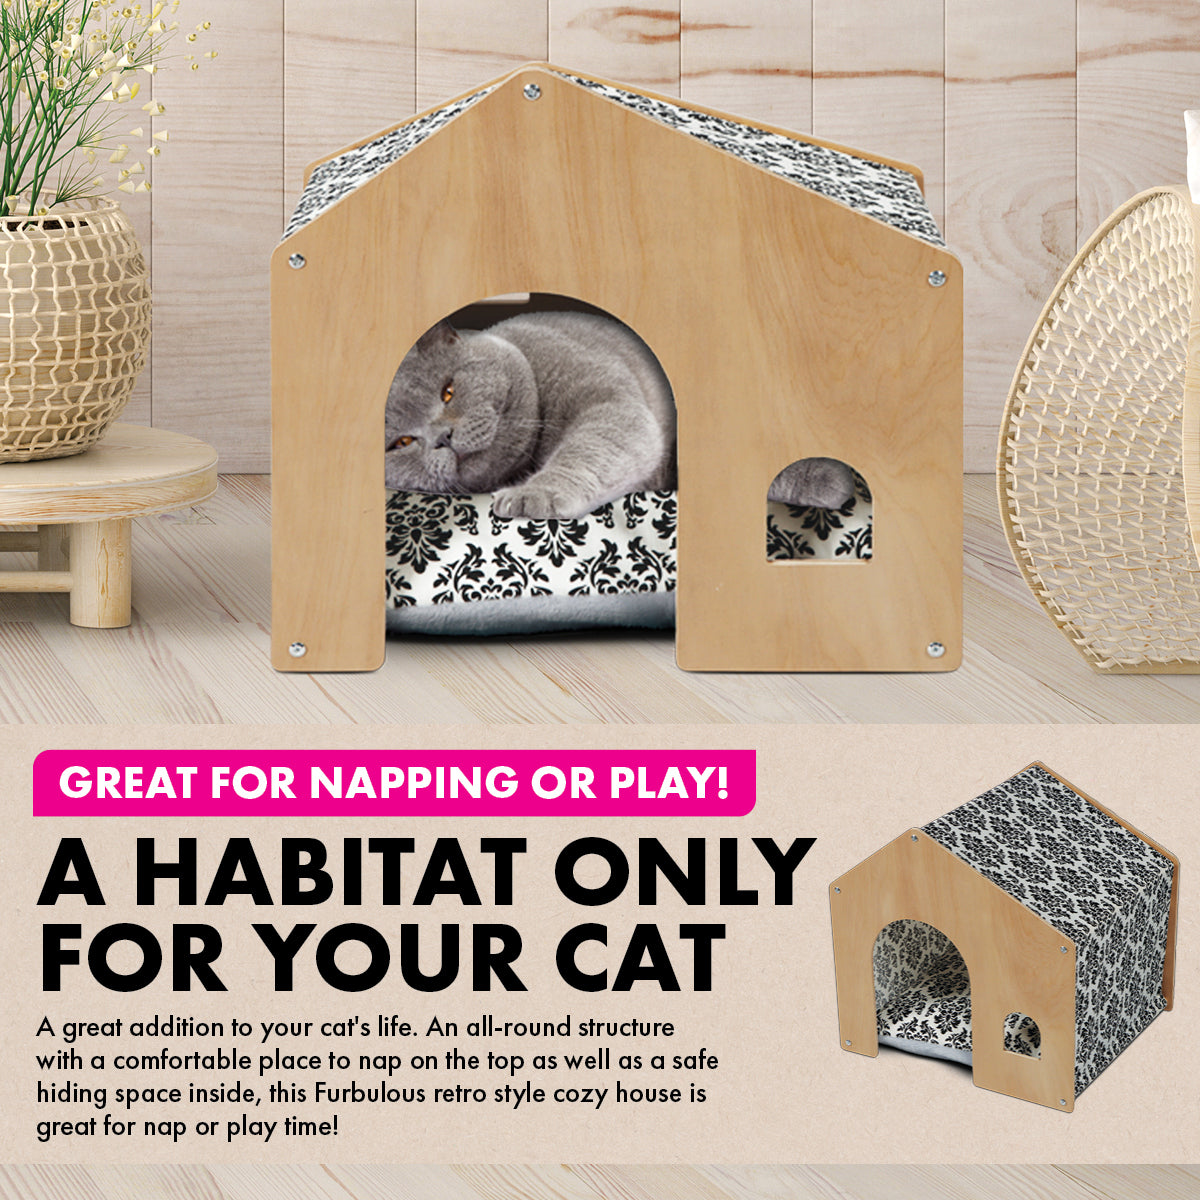 Pet Basic Chimney Cozy Cat House Waterproof Mattress 52 x 47cm x 50cm - SILBERSHELL